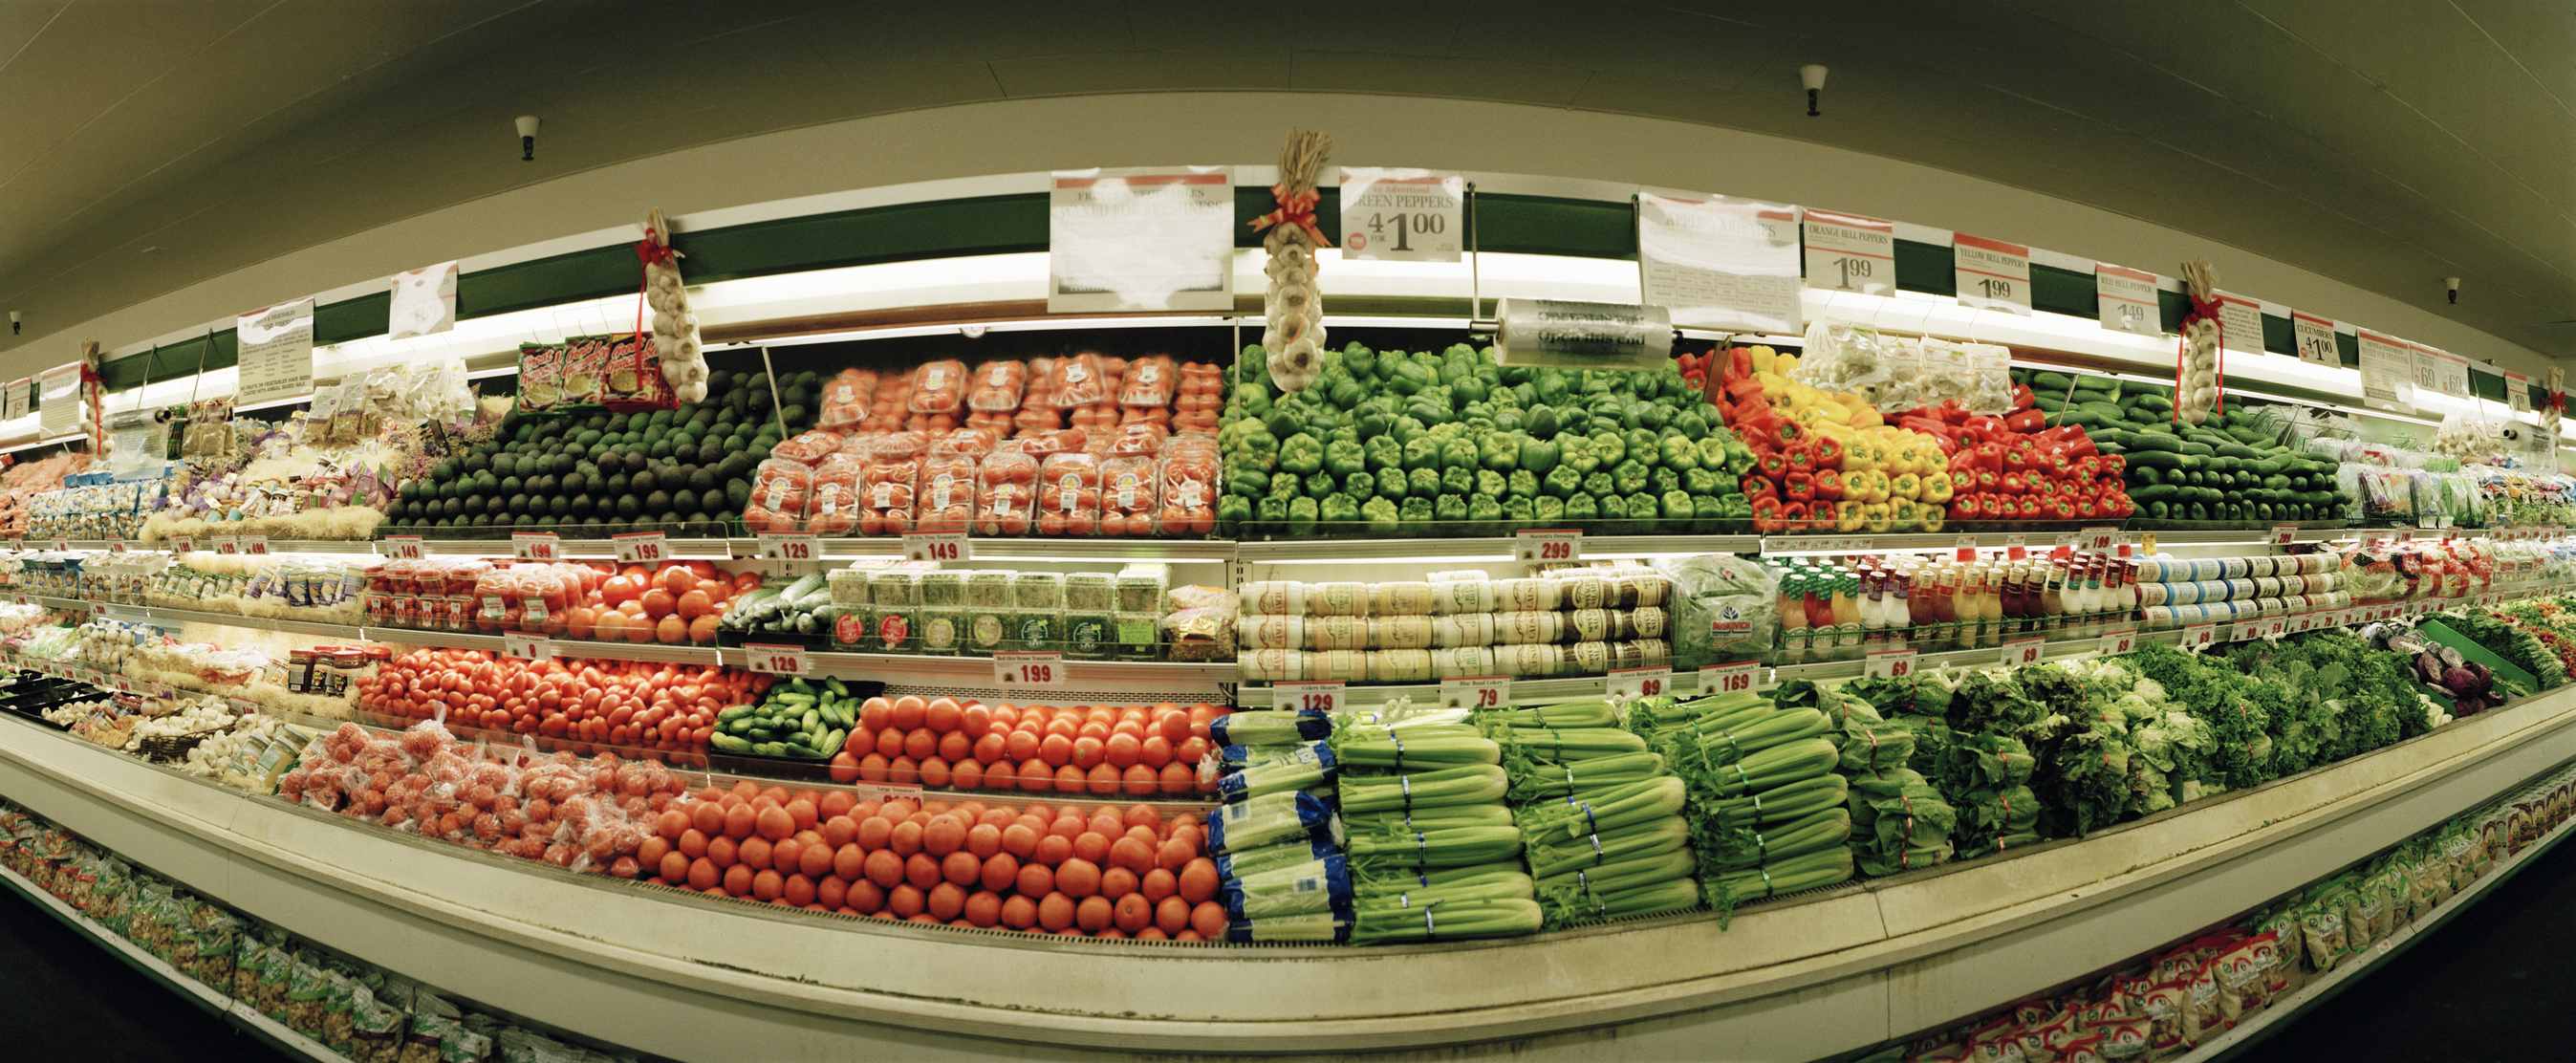 Produce on shelves in supermarket